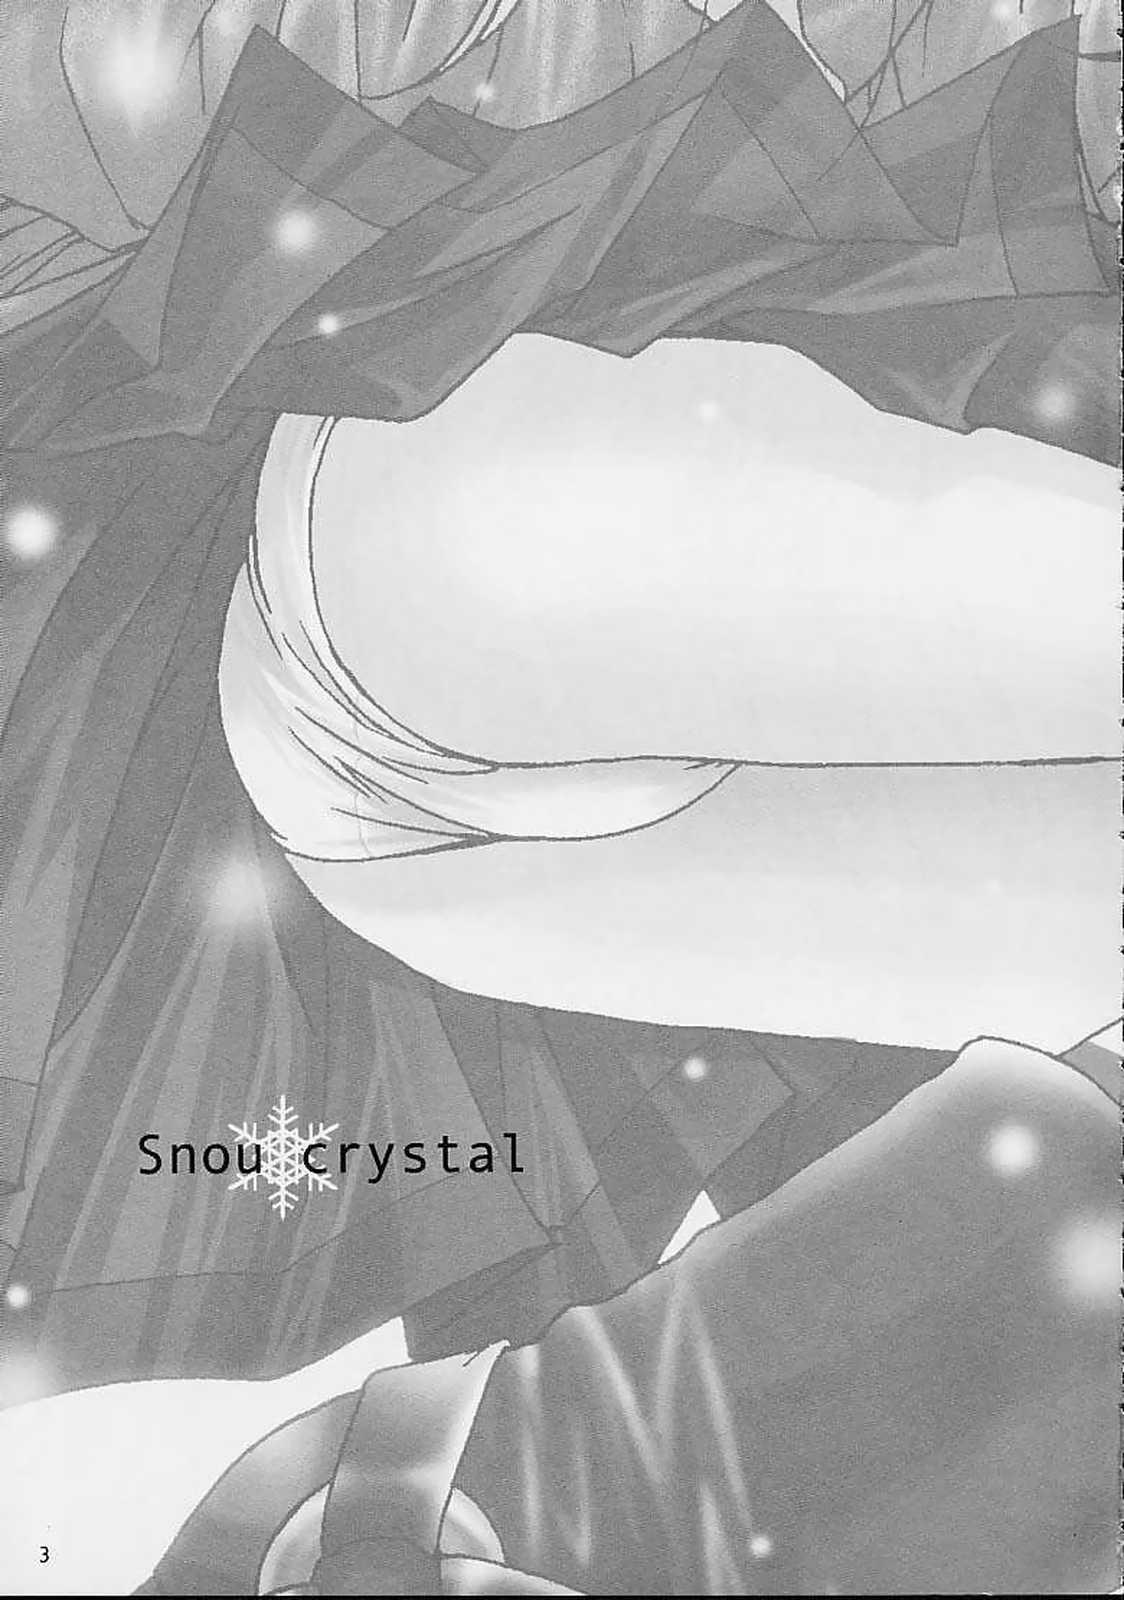 Ex Gf Snow crystal - Kanon Lima - Page 2